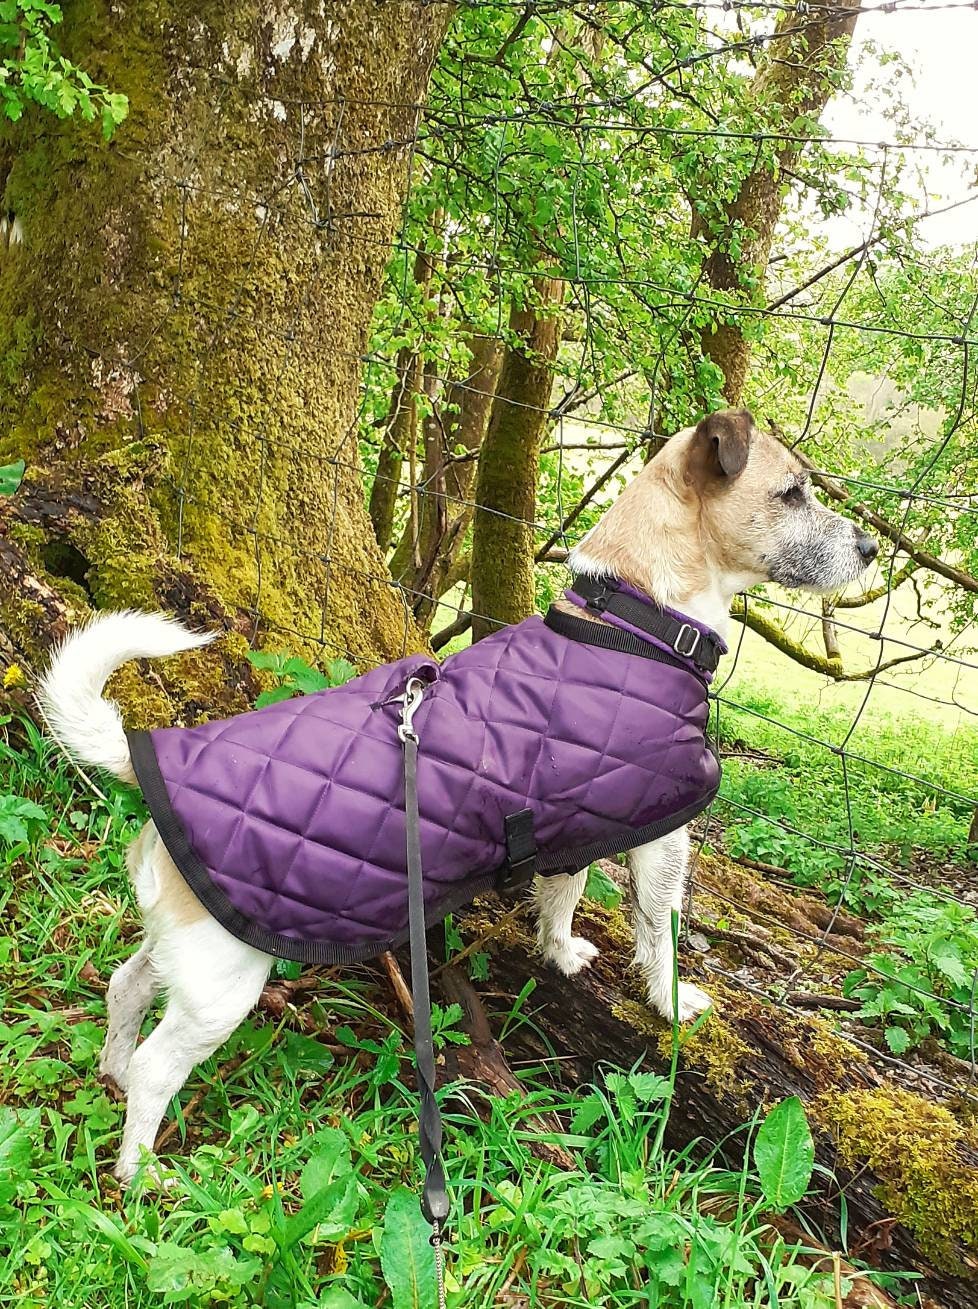 Savlot Winter Dog Coat Pet Clothes Warm Cotton Dog Coat Harness